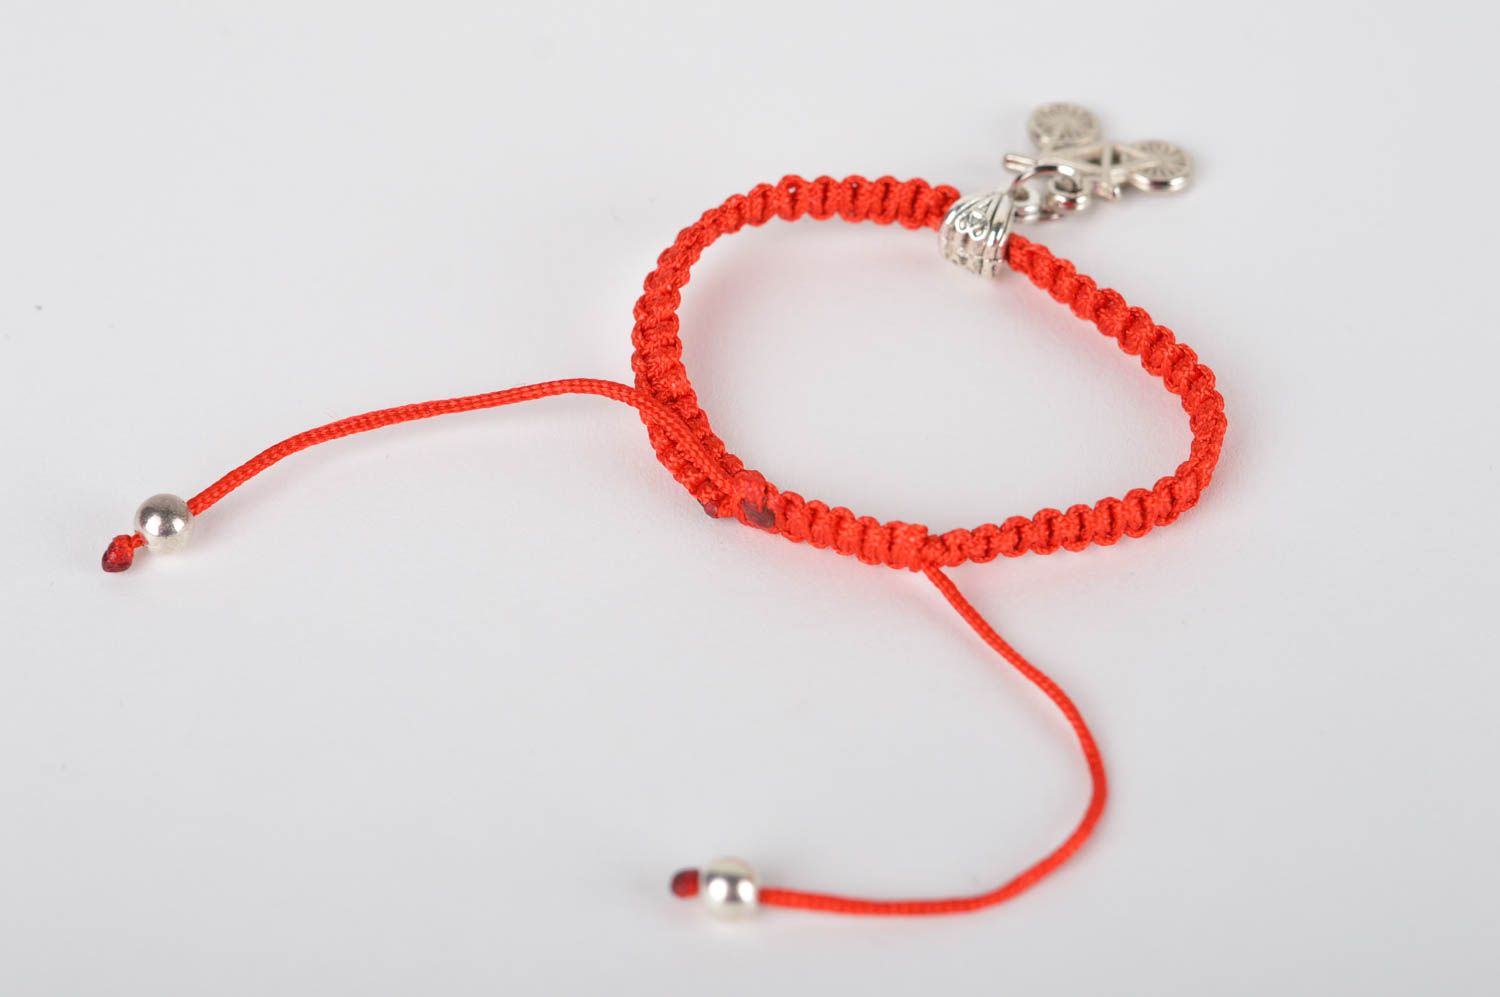 Armband für Frauen handmade Schmuck rotes Armband Designer Accessoire Fahrrad foto 5